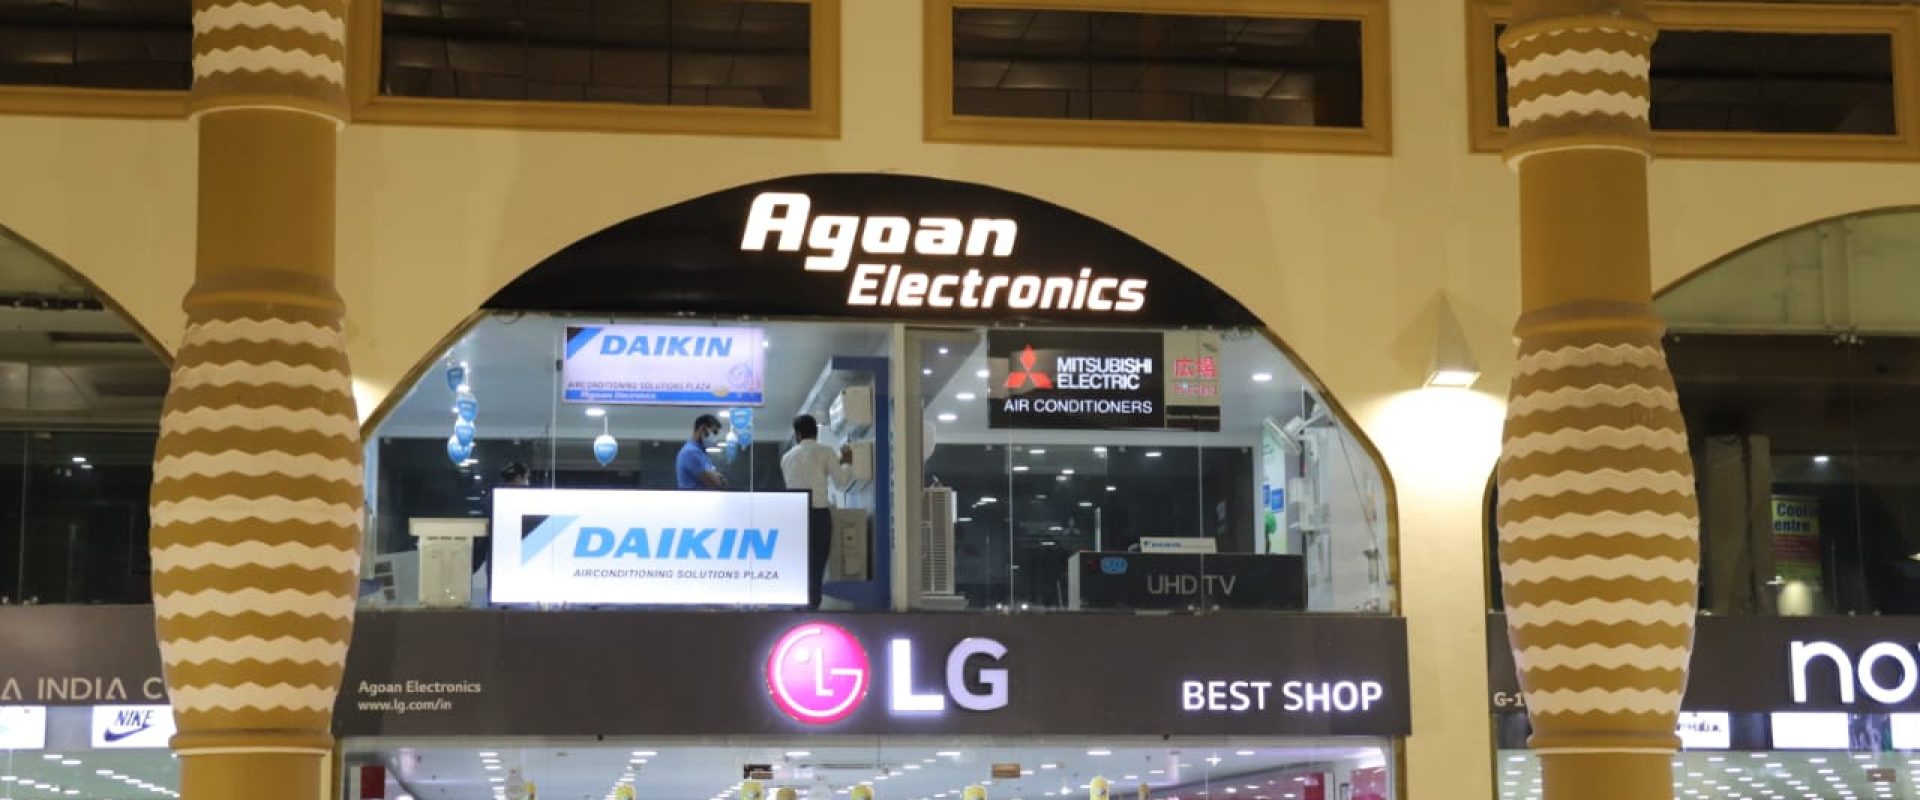 LG, Daikin and Mitsubishi Exclusive Store, Sodala